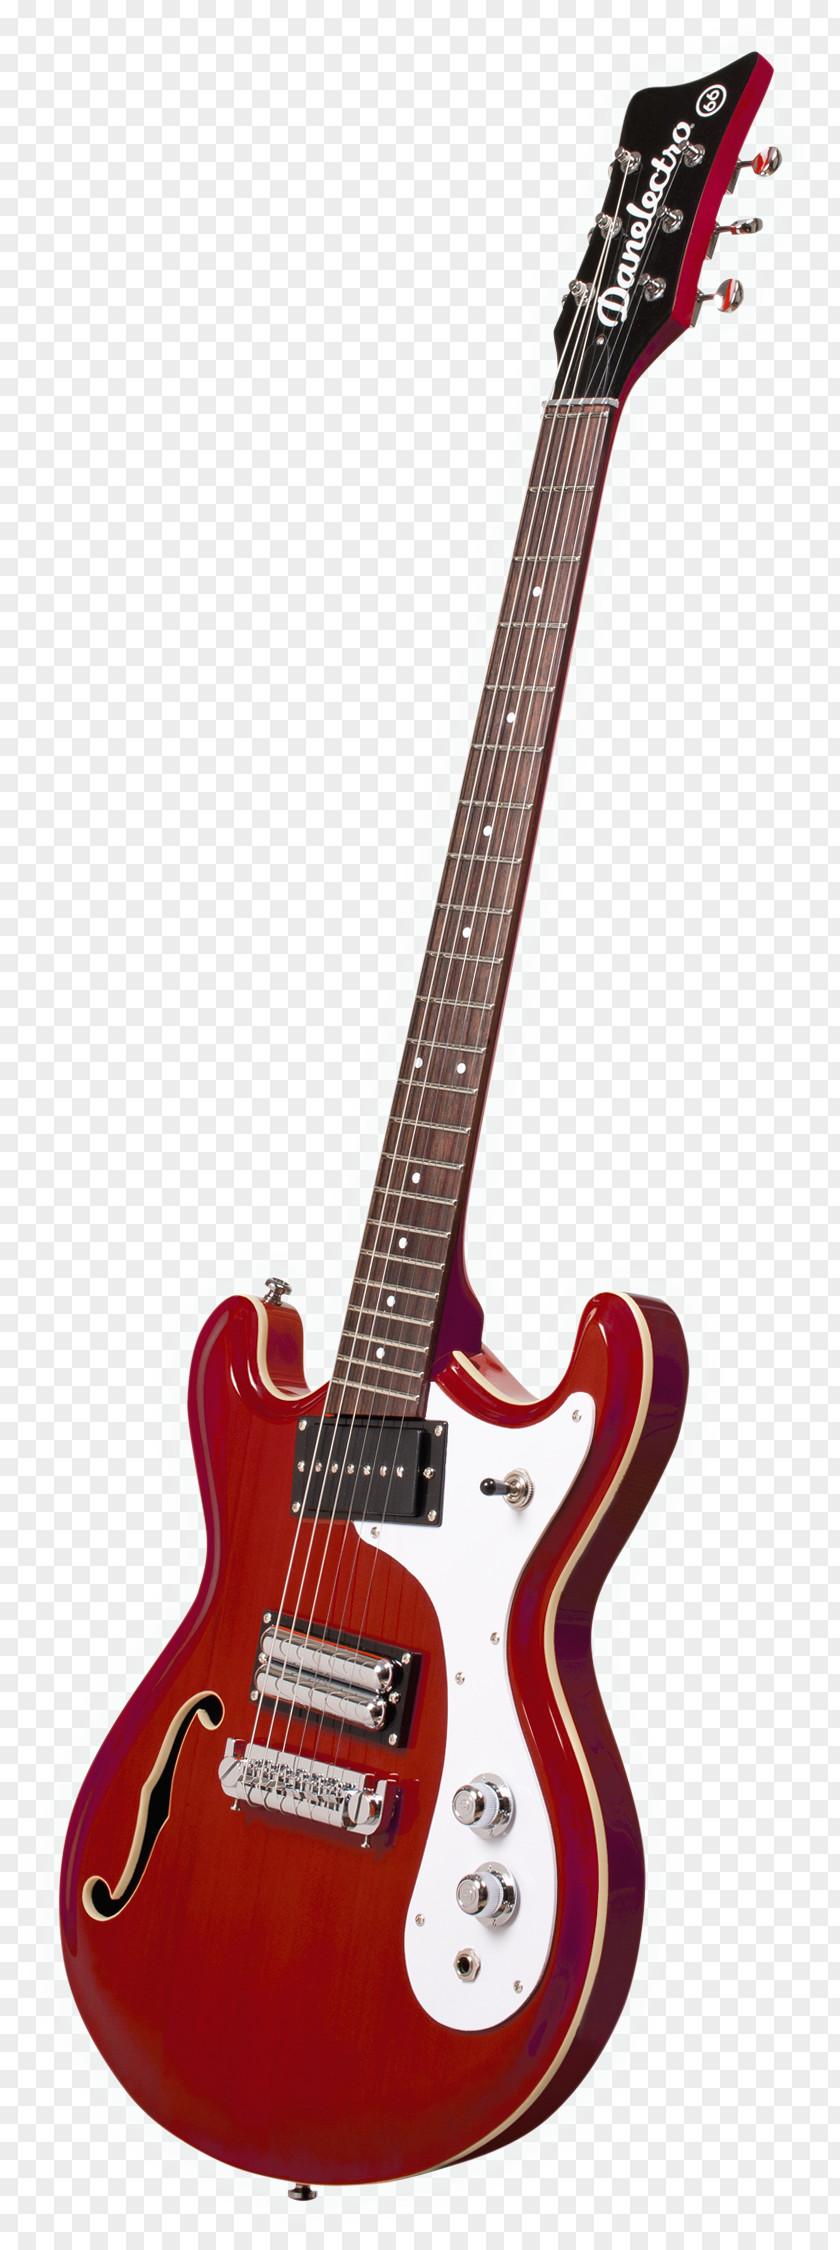 Bass Guitar Electric Danelectro Fender Starcaster PNG